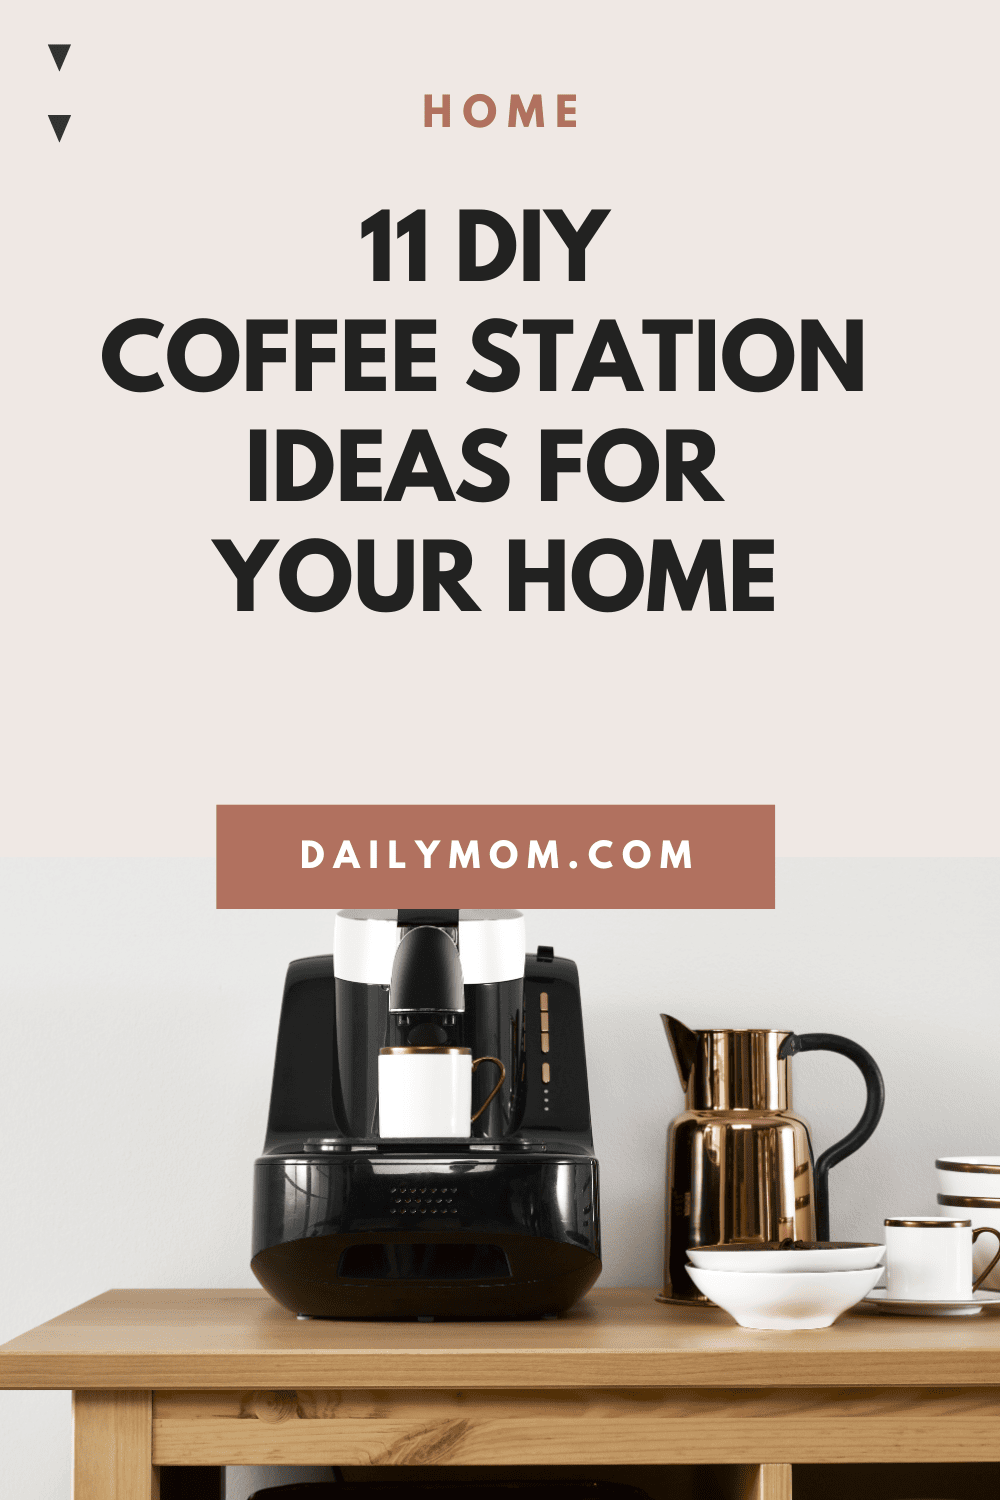 Daily Mom Parent Portal Coffee Station